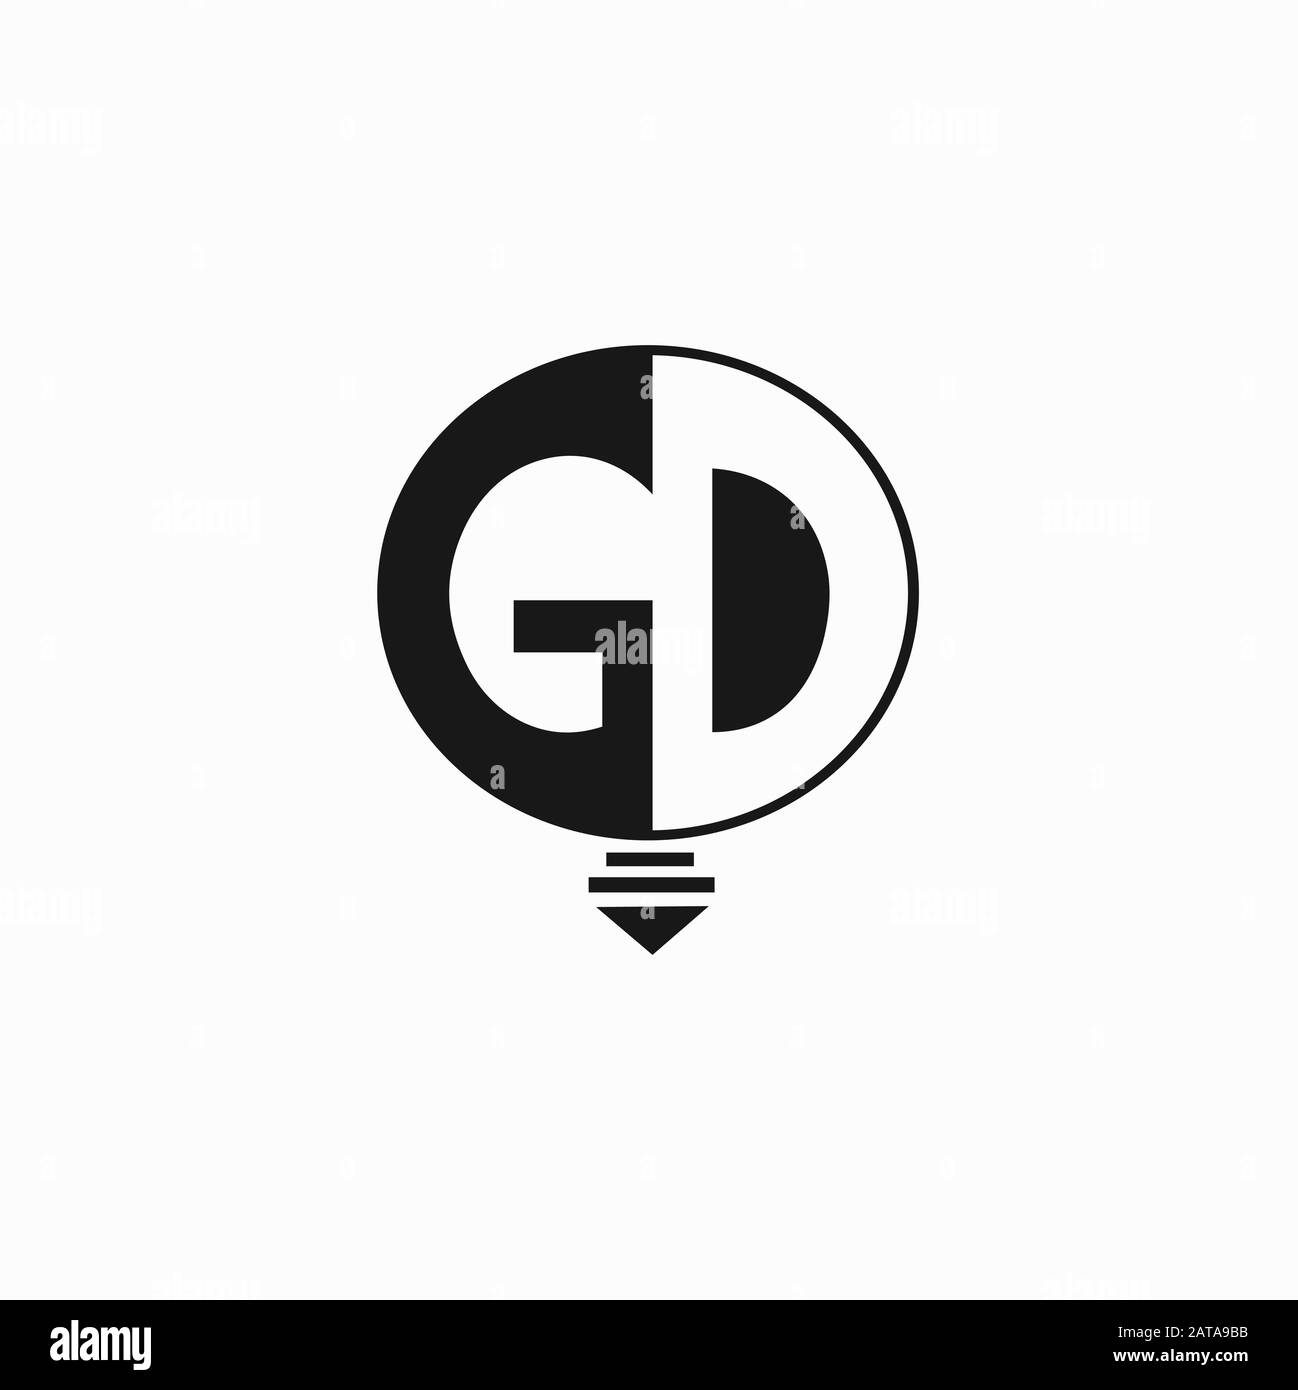 Initial letter gd or dg logo vector design template Stock Vector